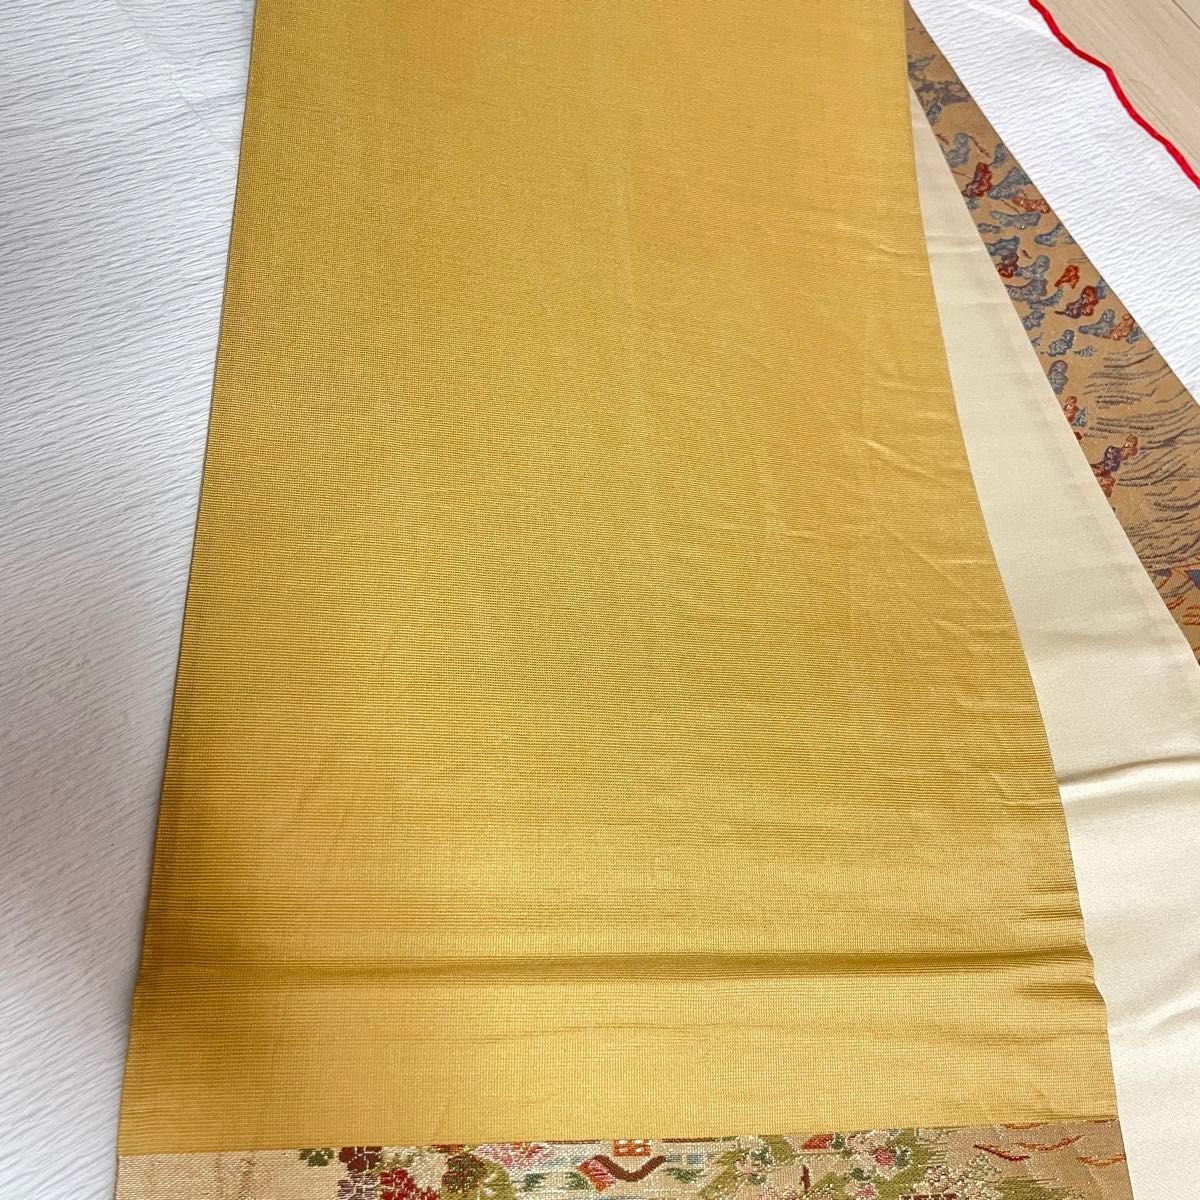 堀川古典 袋帯 着物 正絹 仕立て上がり 金 豪華 帯 和装 和服 礼装